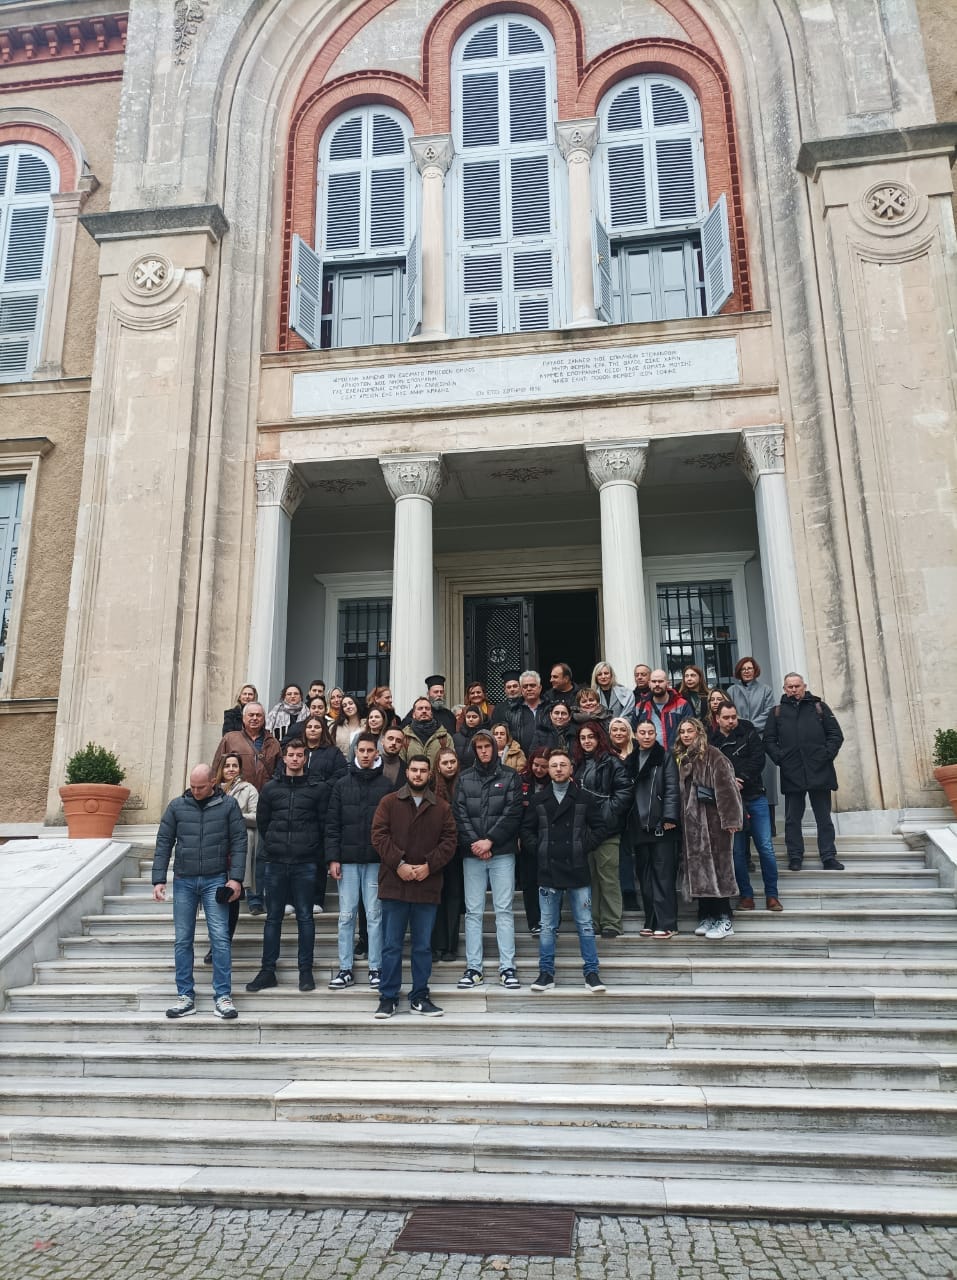 Metropolitan of Ioannina paid official visit to Theological School of Halki